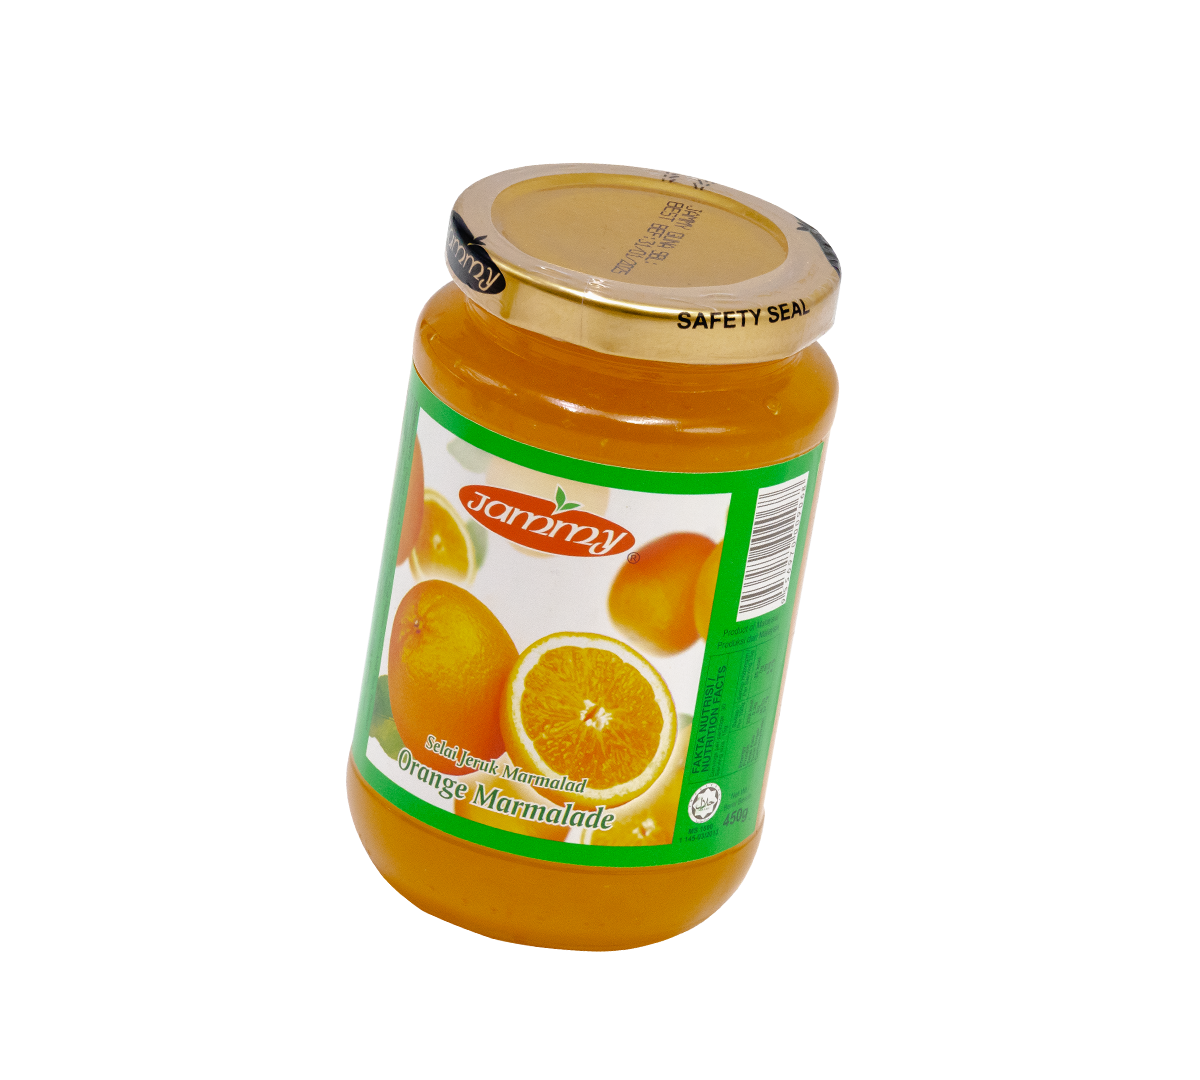 Jammy Orange Mamalade Jam - 450g